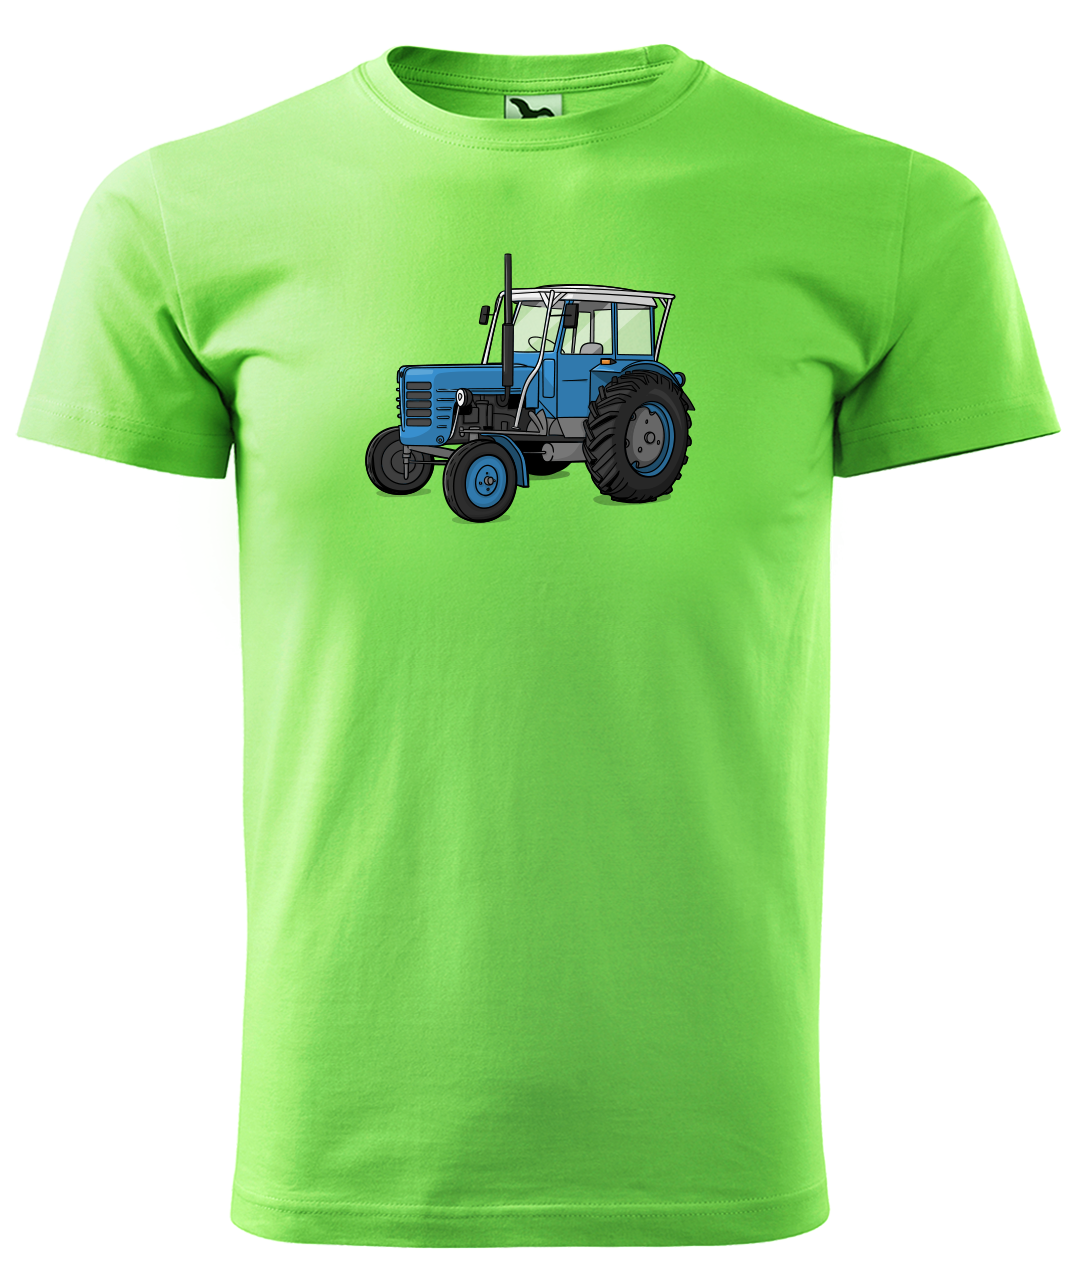 Dětské tričko s traktorem - Starý traktor Velikost: 6 let / 122 cm, Barva: Apple Green (92)